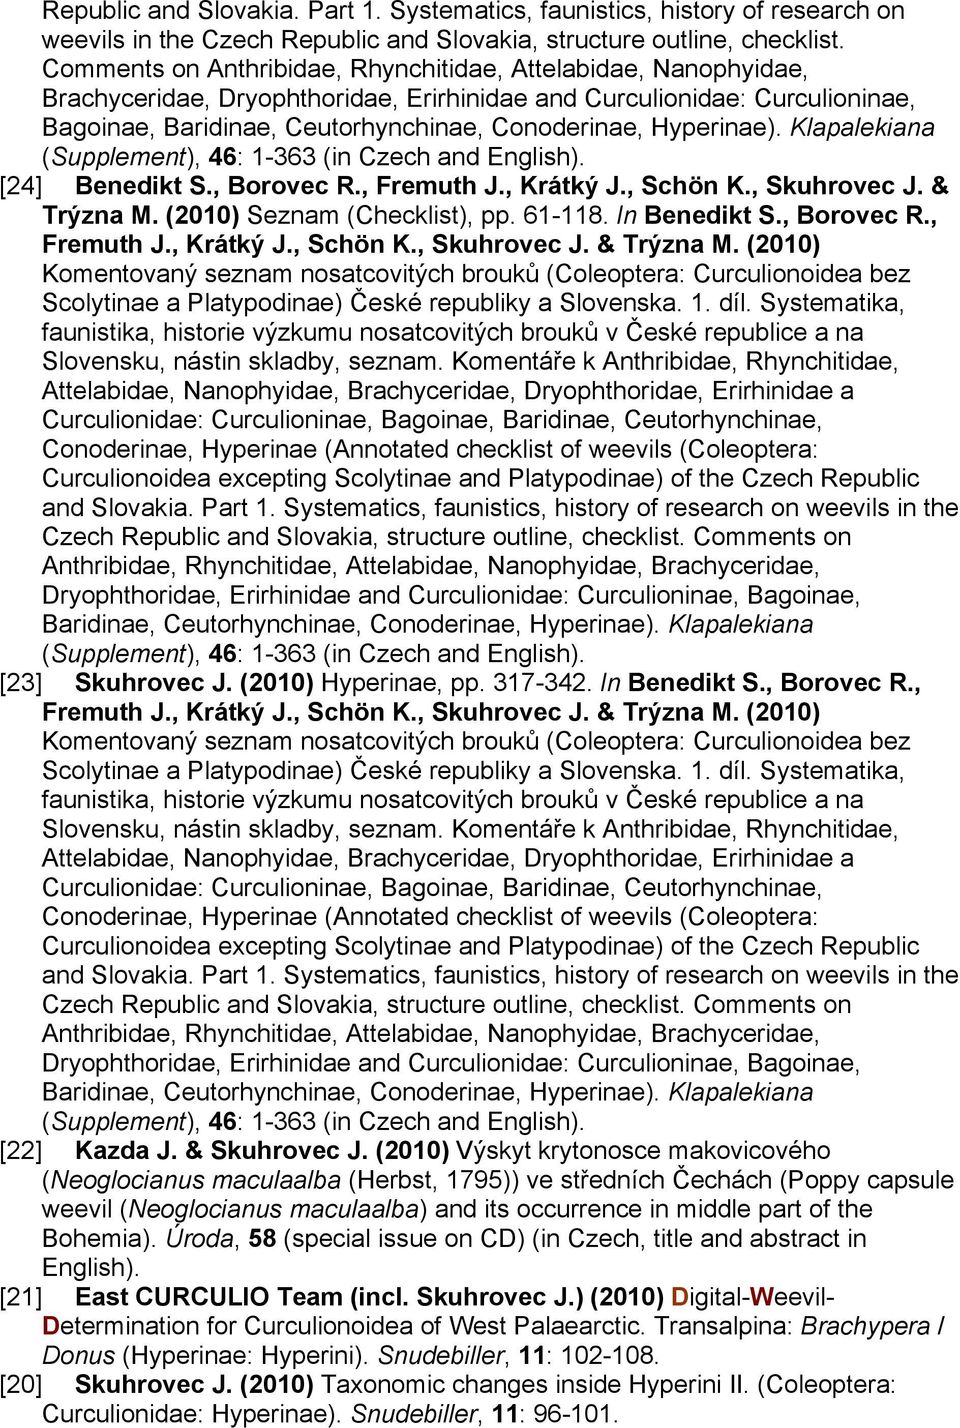 Hyperinae). Klapalekiana (Supplement), 46: 1-363 (in Czech and English). [24] Benedikt S., Borovec R., Fremuth J., Krátký J., Schön K., Skuhrovec J. & Trýzna M. (2010) Seznam (Checklist), pp. 61-118.